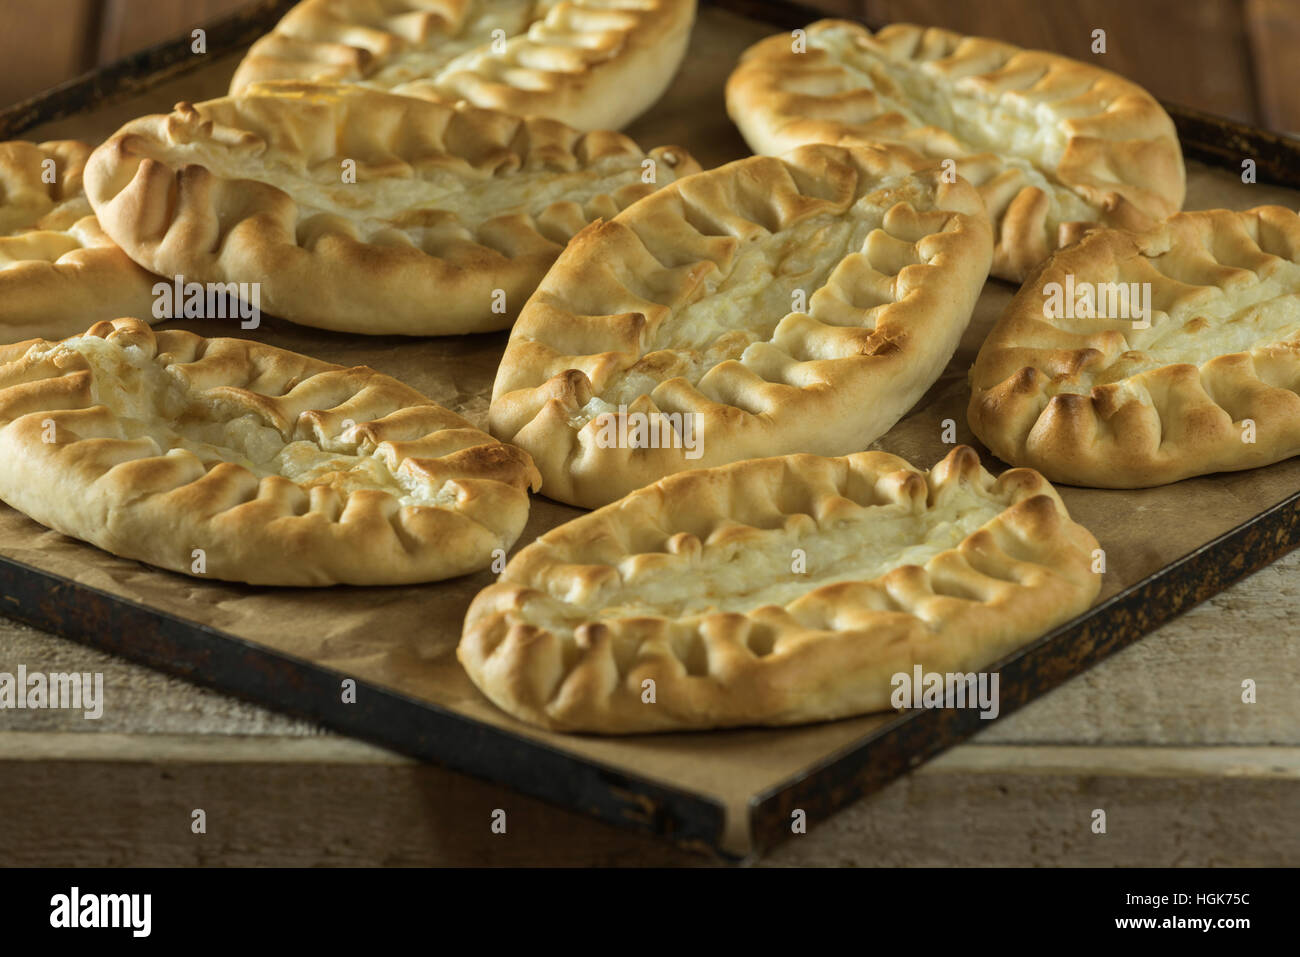 Karelian pies. Traditional pasties from Finland Stock Photo